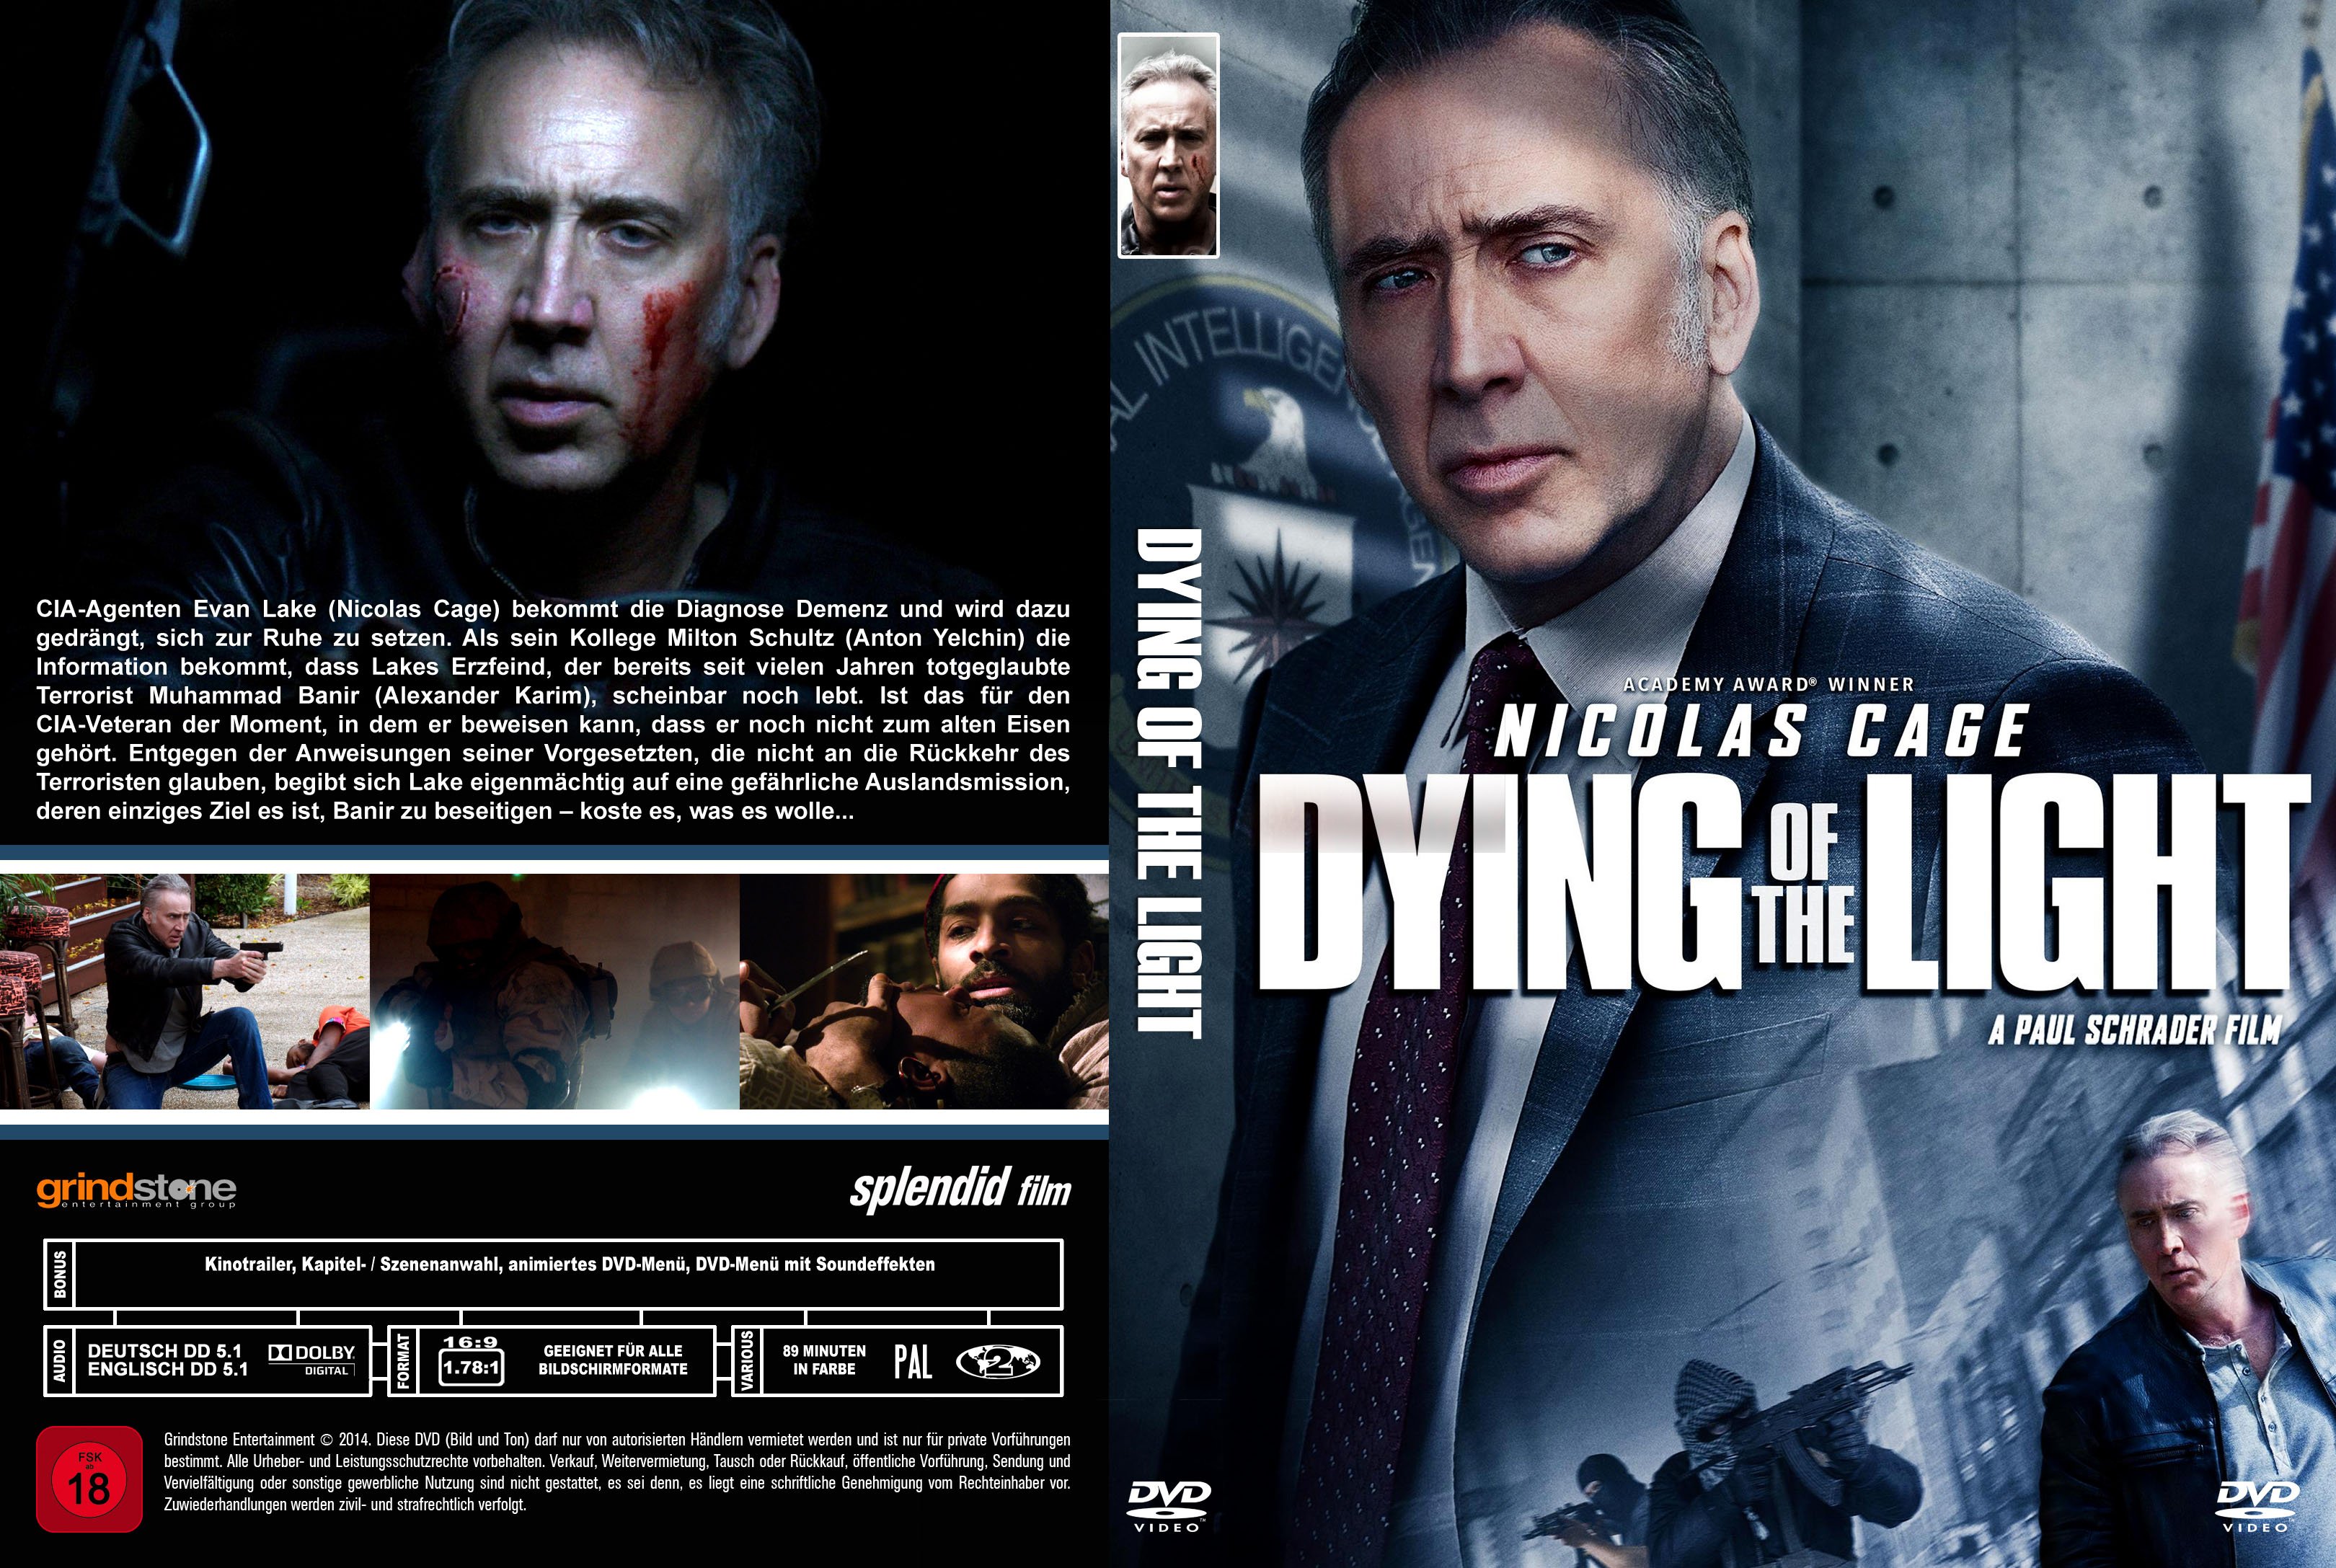 dying light pc dvd